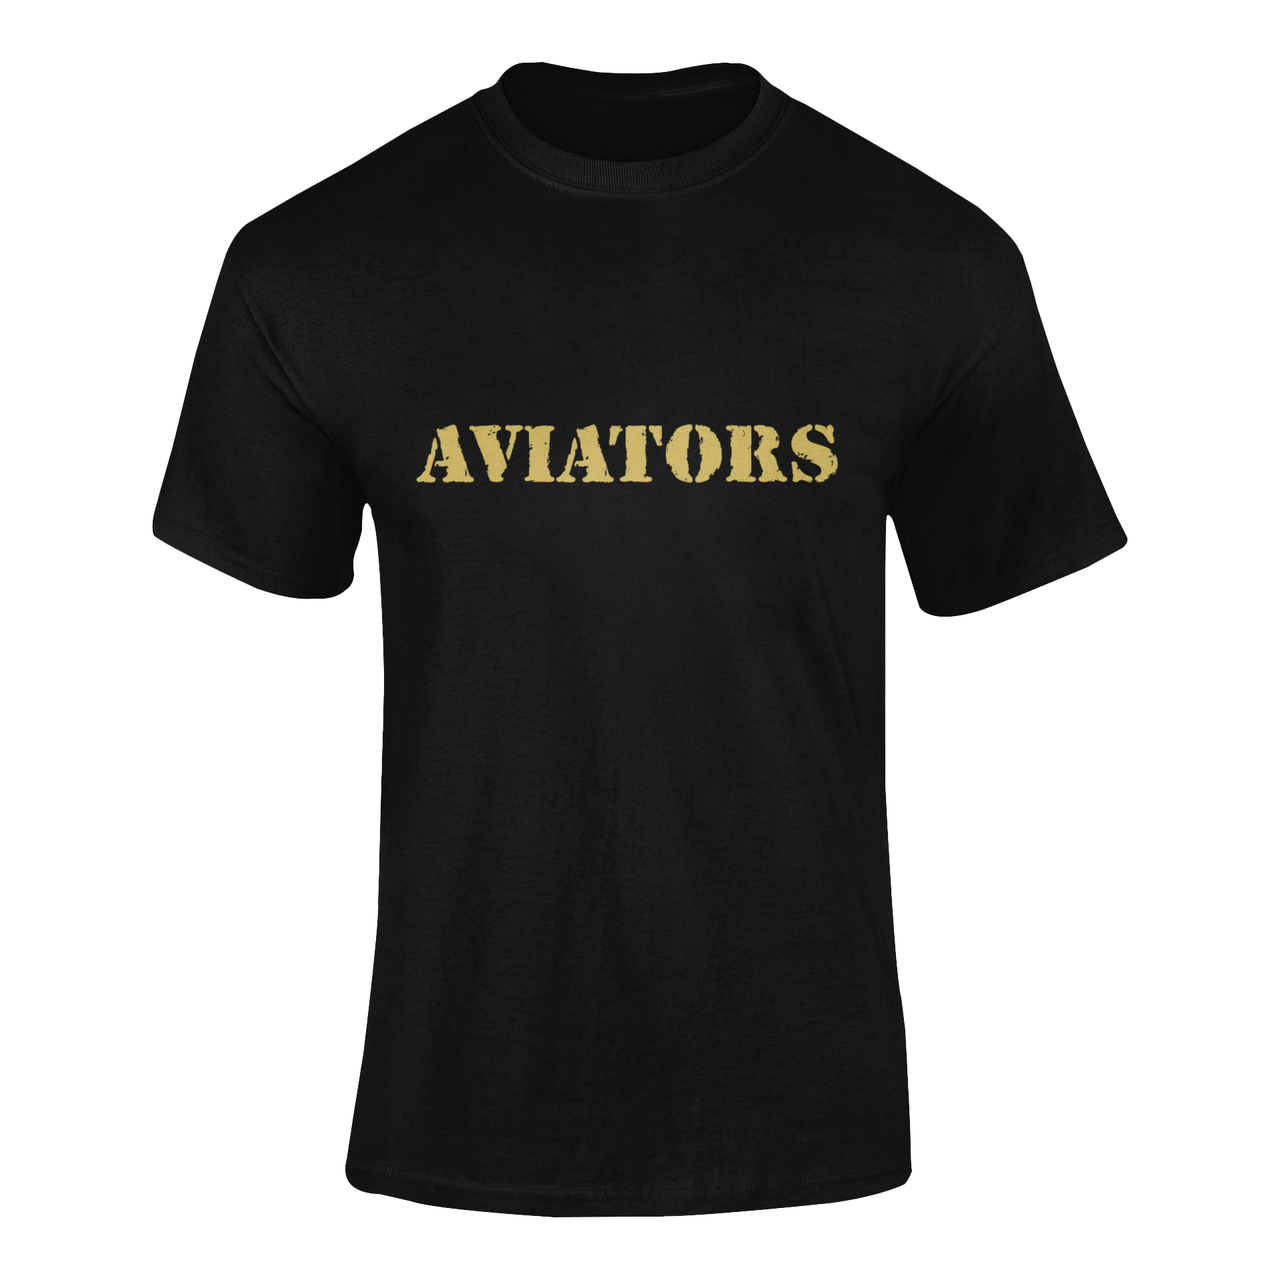 Army T-shirt - Aviators (Men)